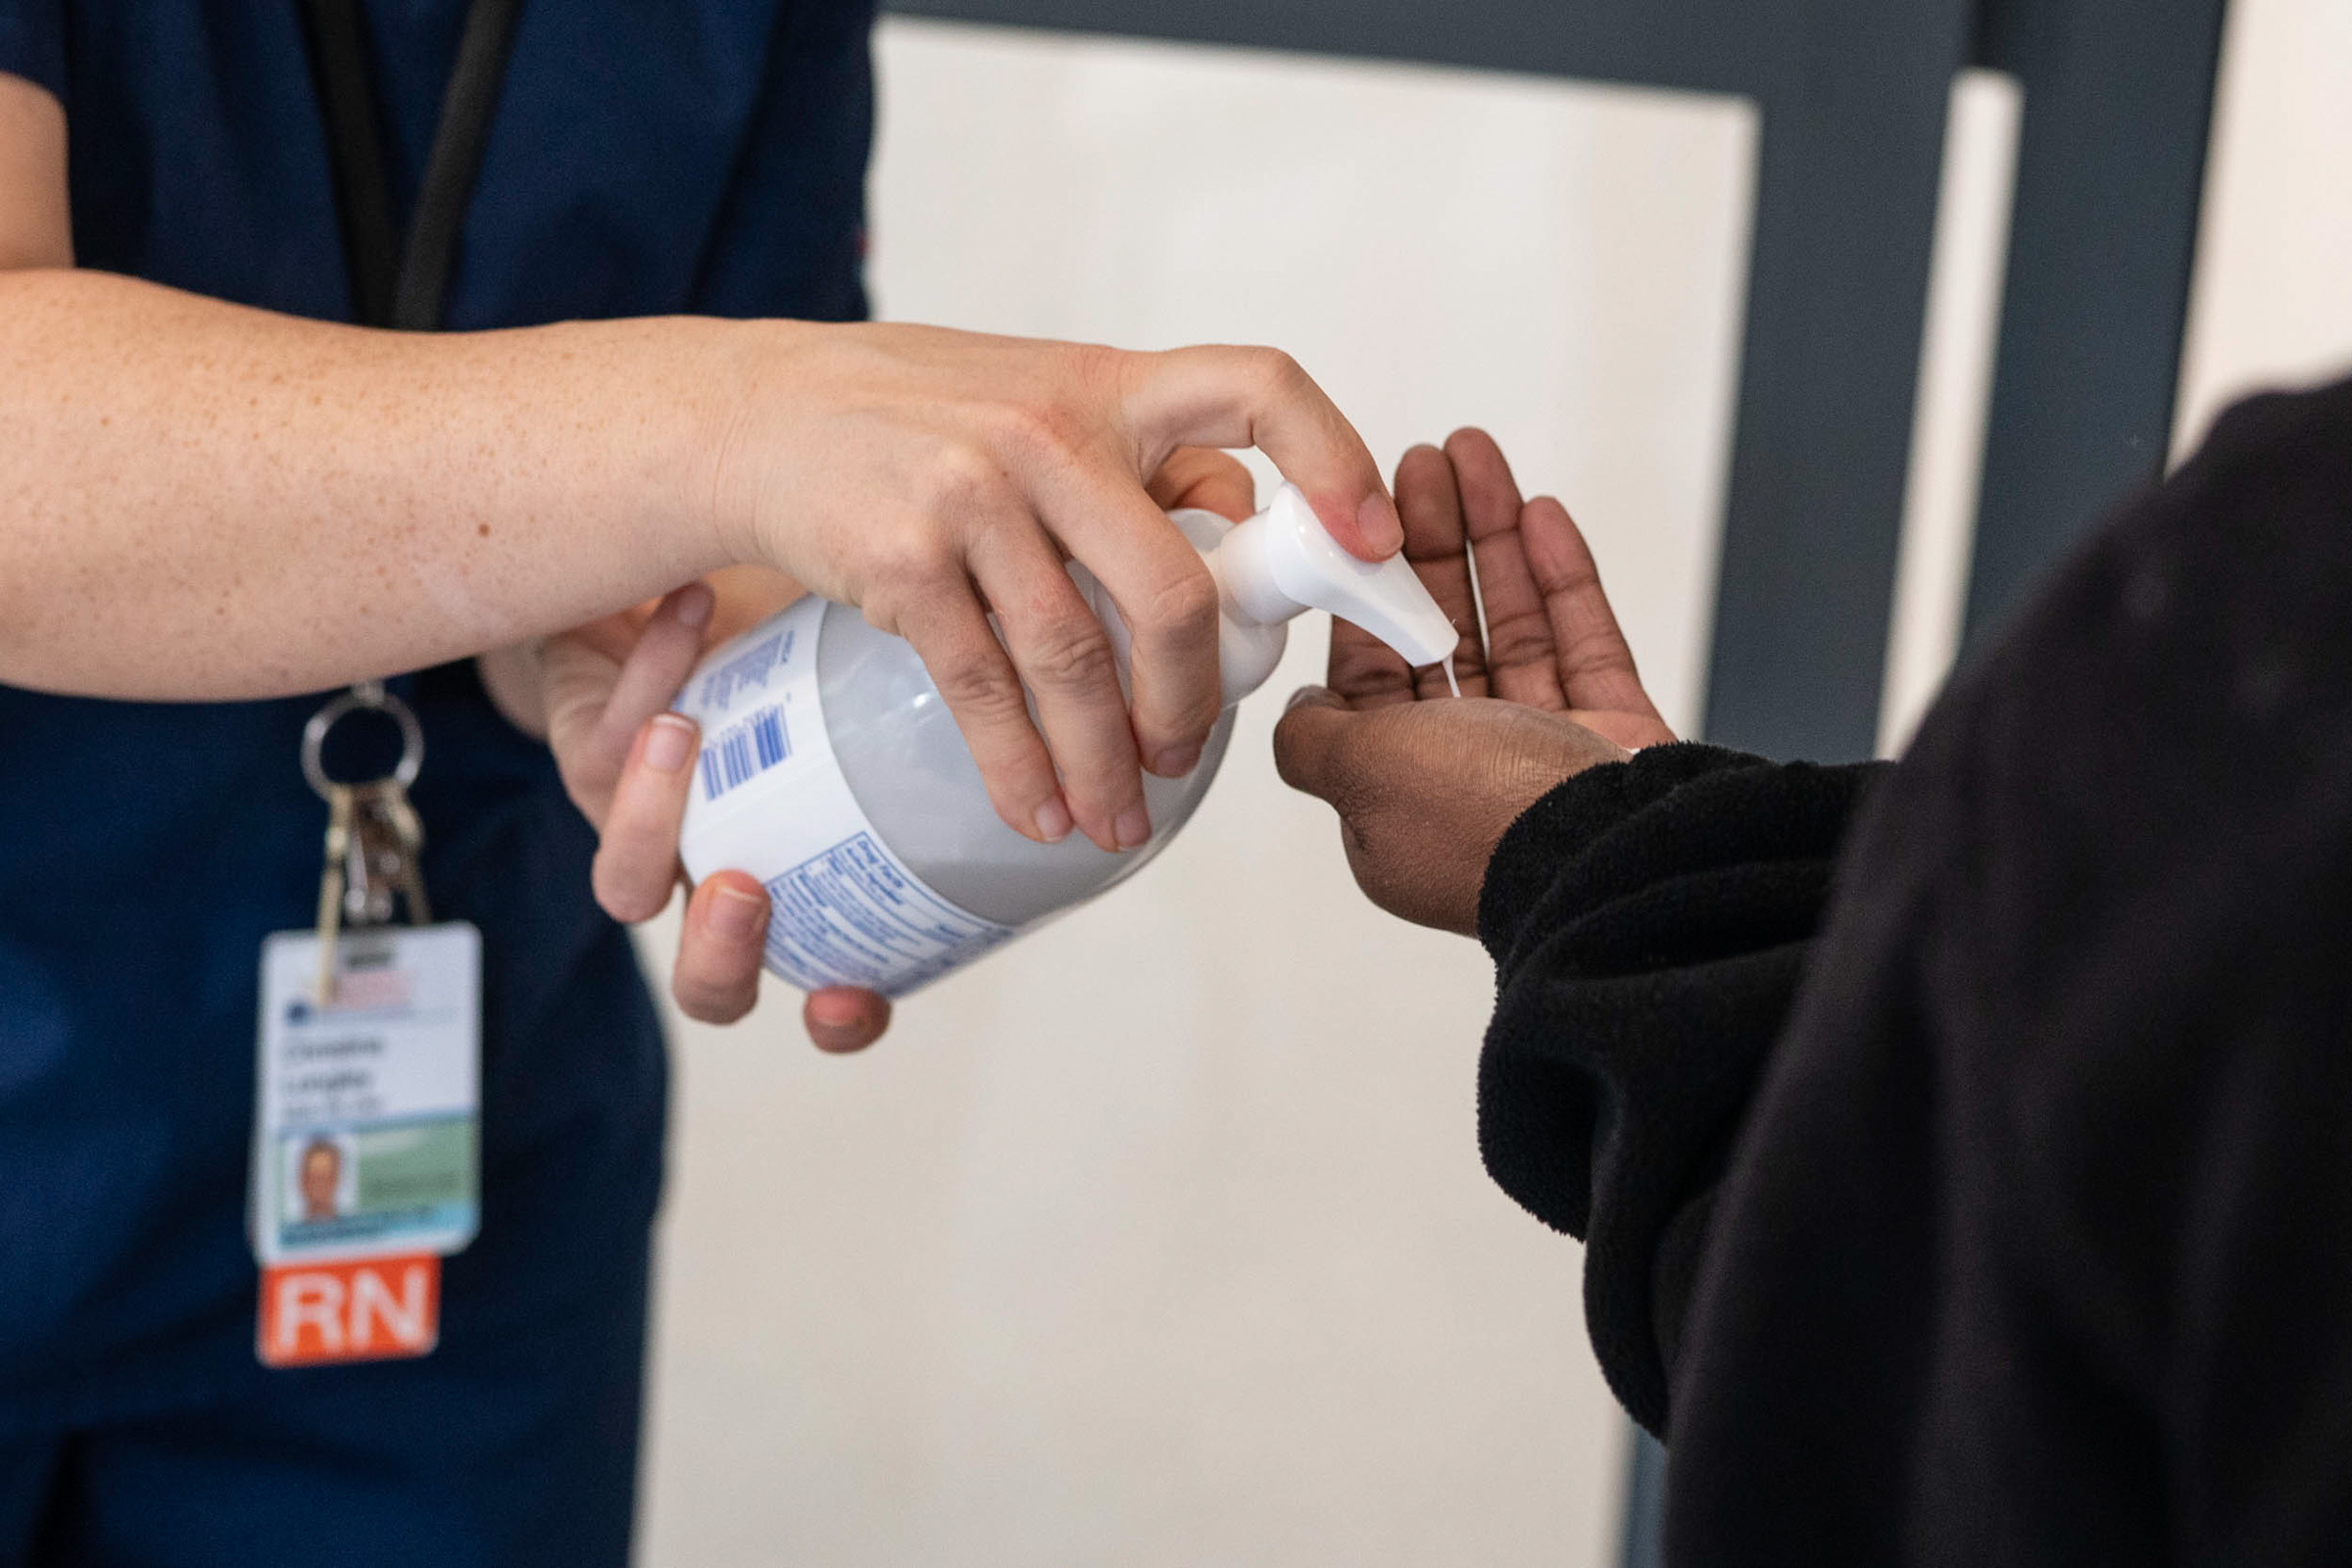 Nurse giving a visitor hand sanitizer 